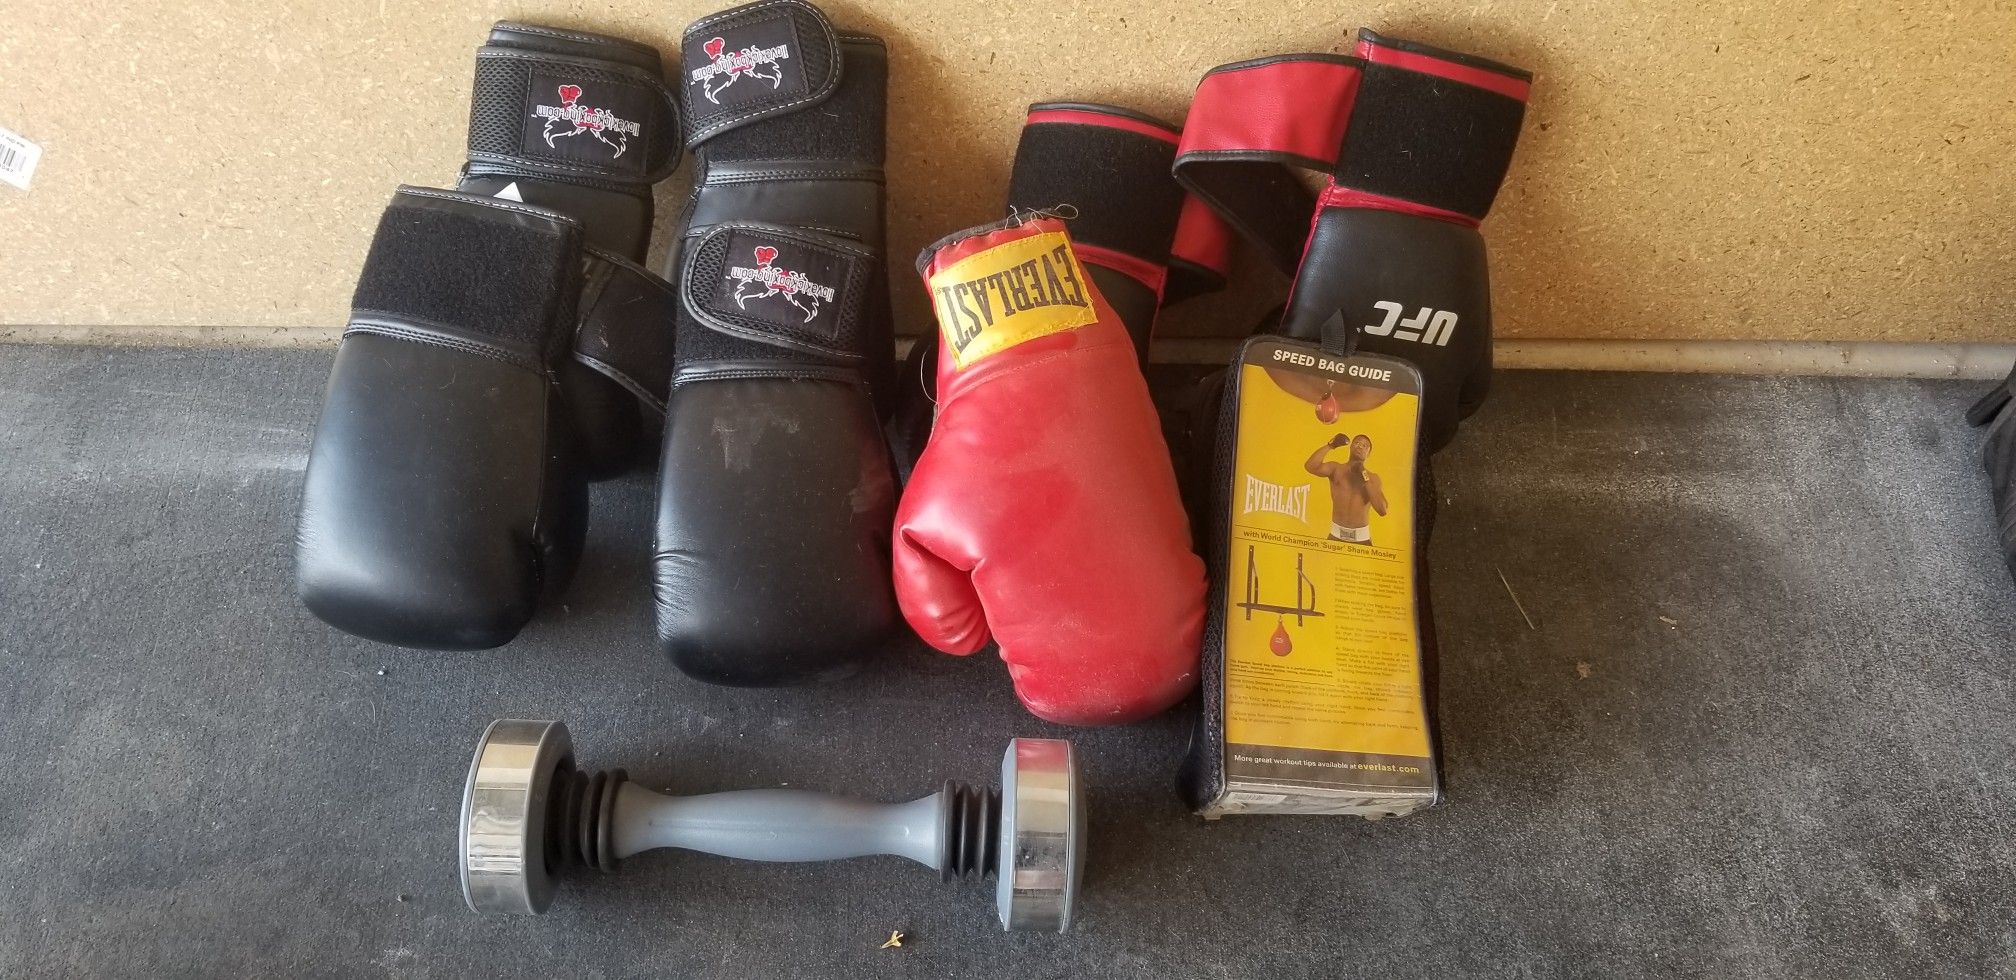 Kick boxing/boxing gloves, spd bag